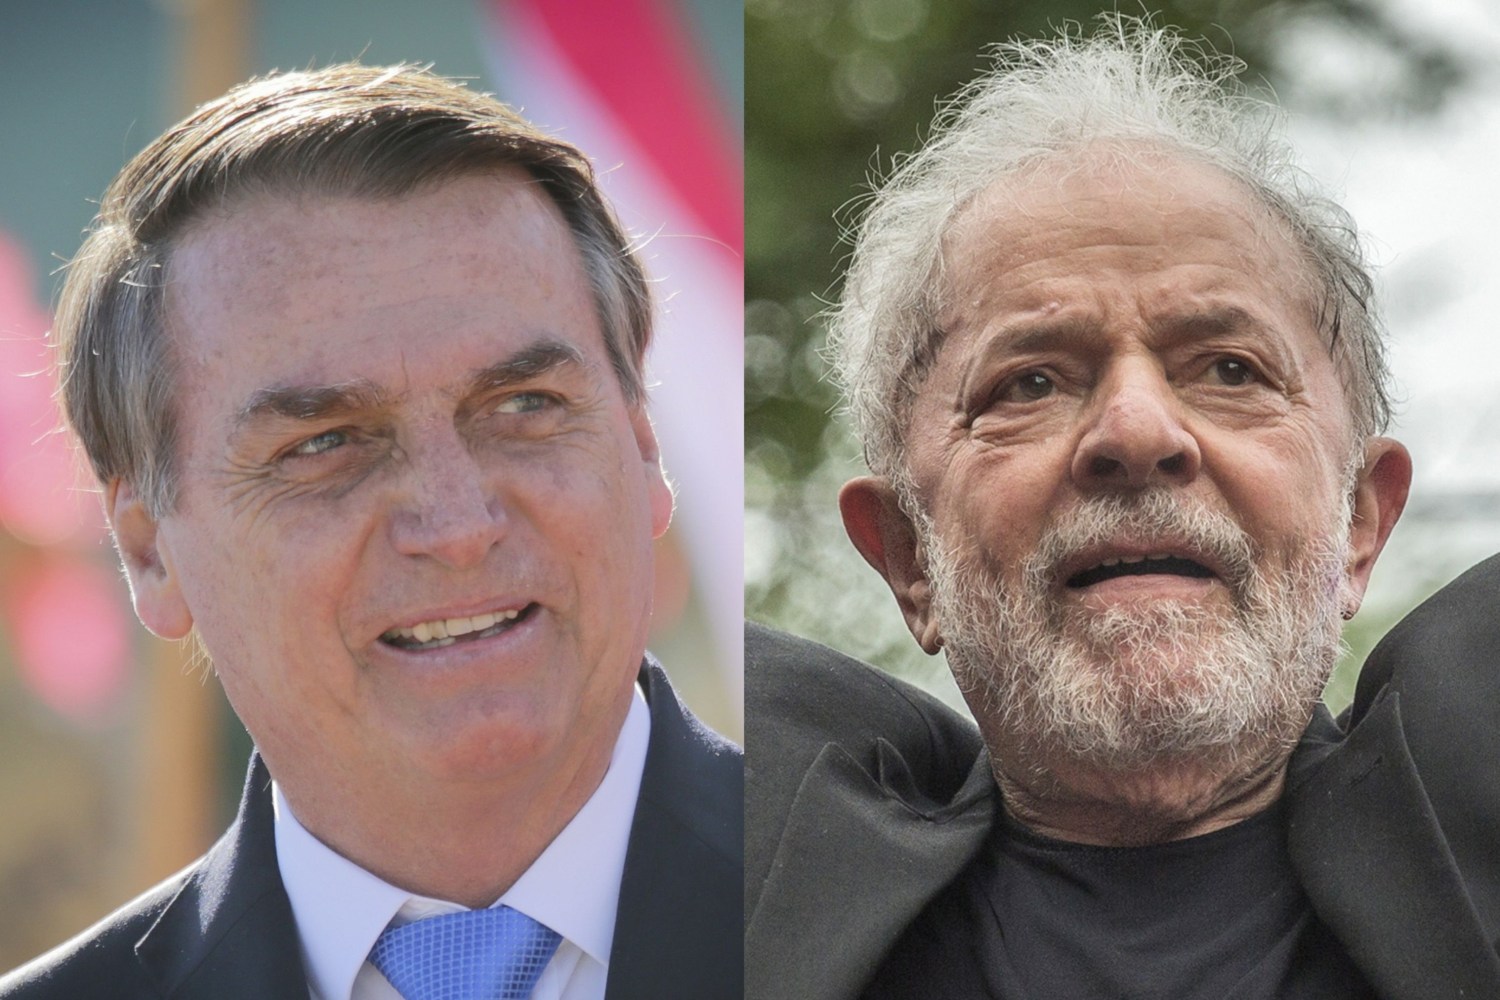 Havera segundo turno entre Lula e Bolsonaro diz pesquisa